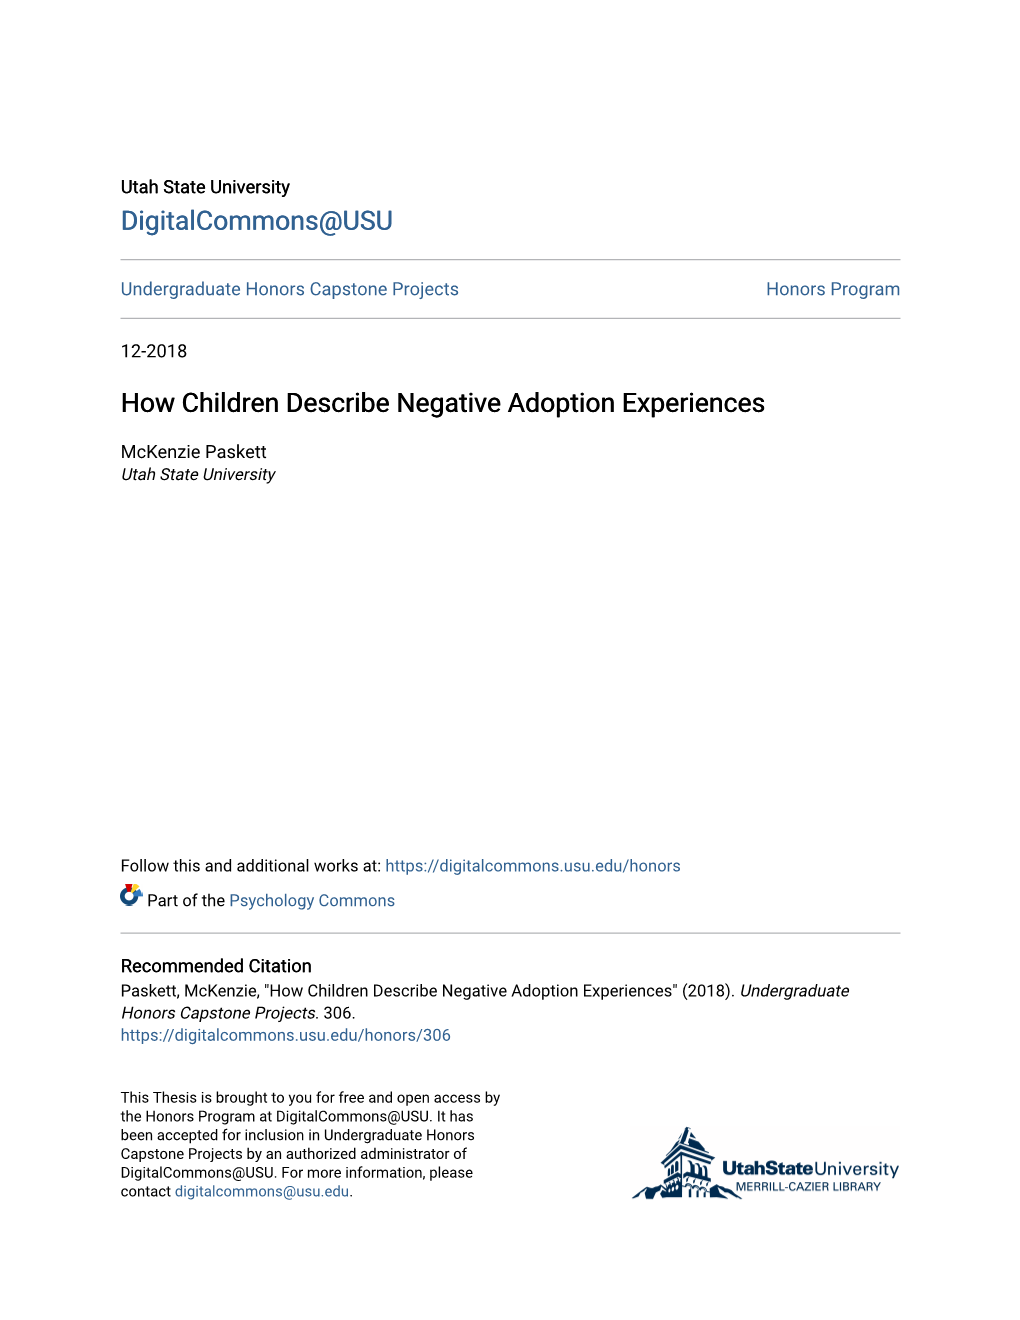 How Children Describe Negative Adoption Experiences